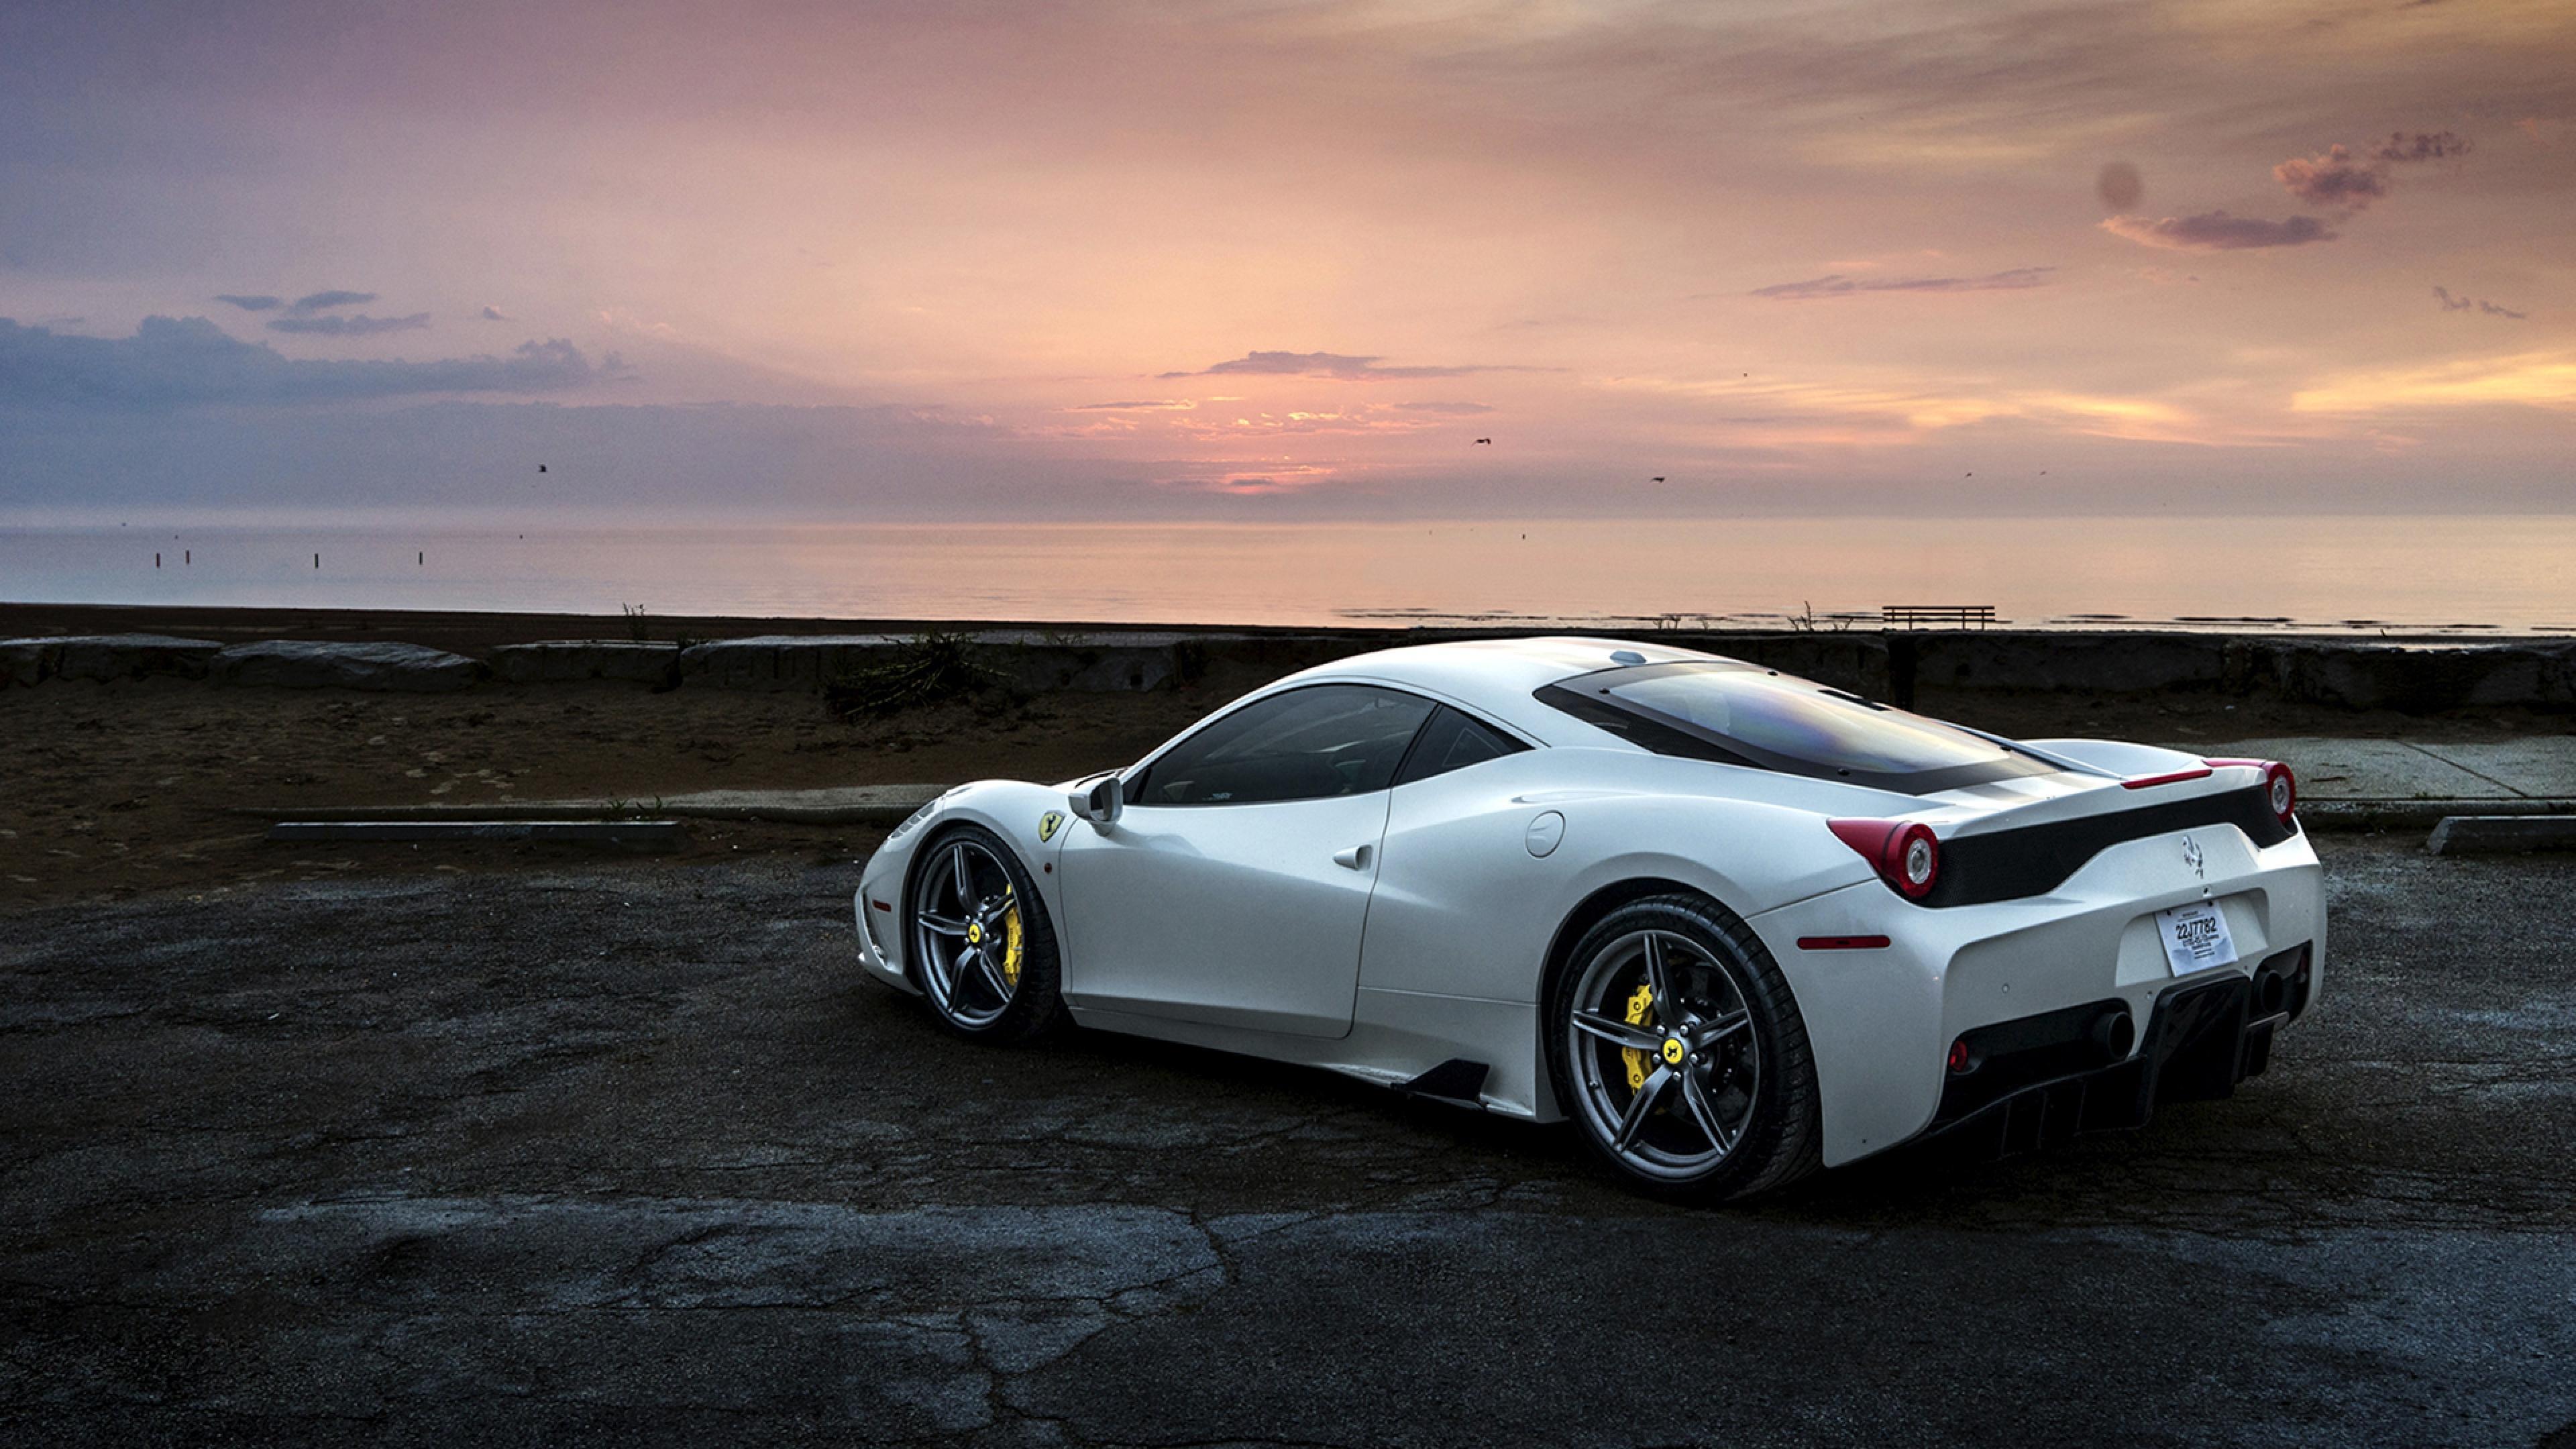 Ferrari 458 White, HD Cars, 4k Wallpapers, Image, Backgrounds